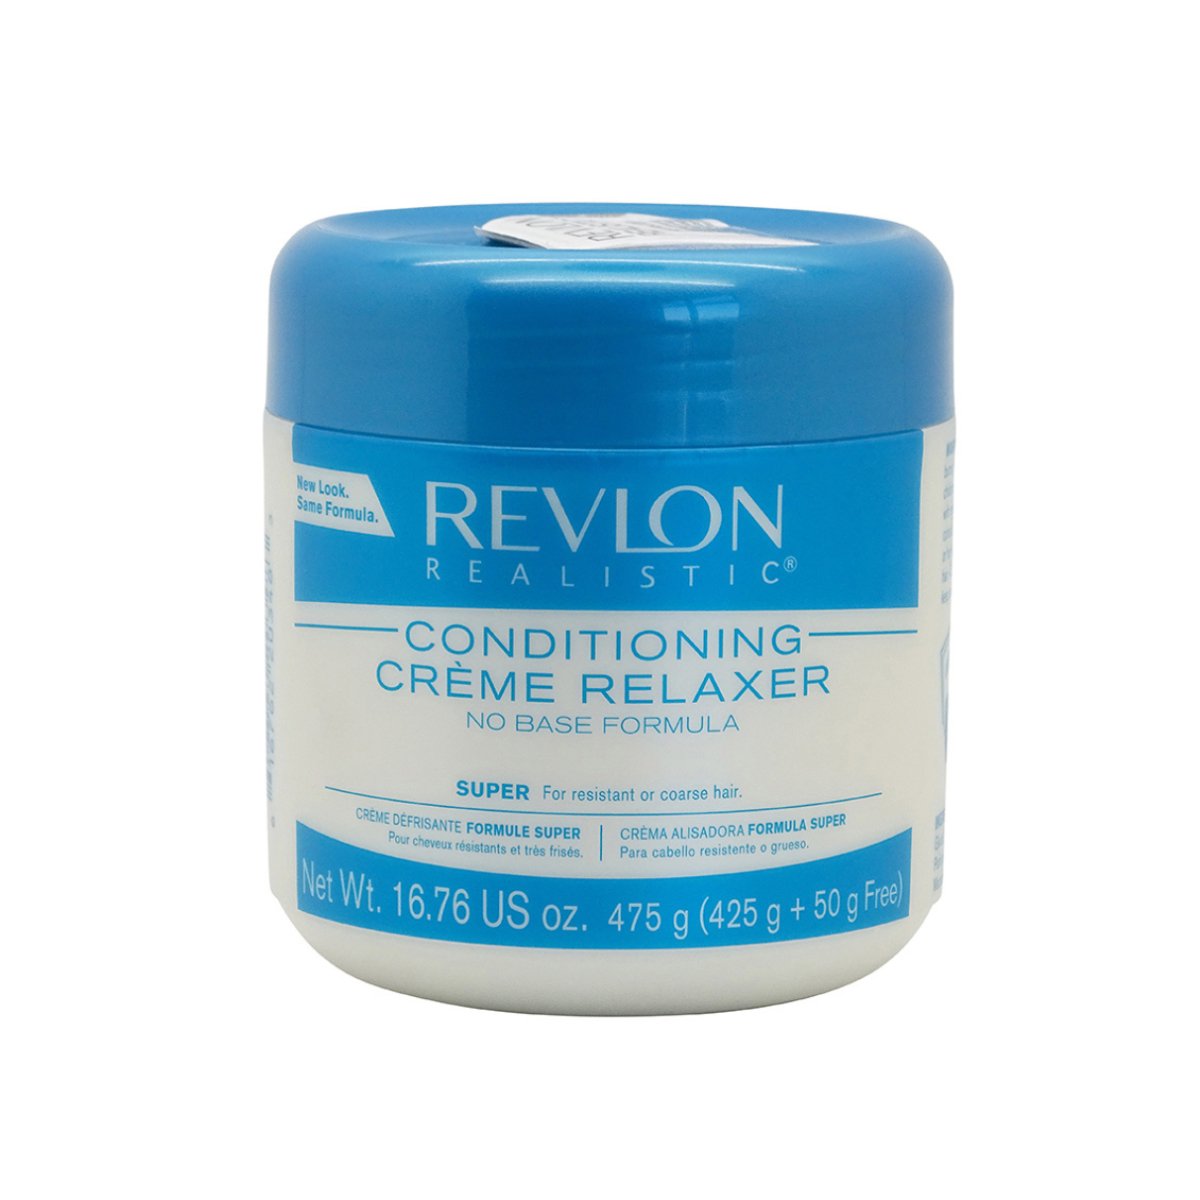 Revlon Realistic Creme Relaxer SUPER 425g - CosFair GmbH